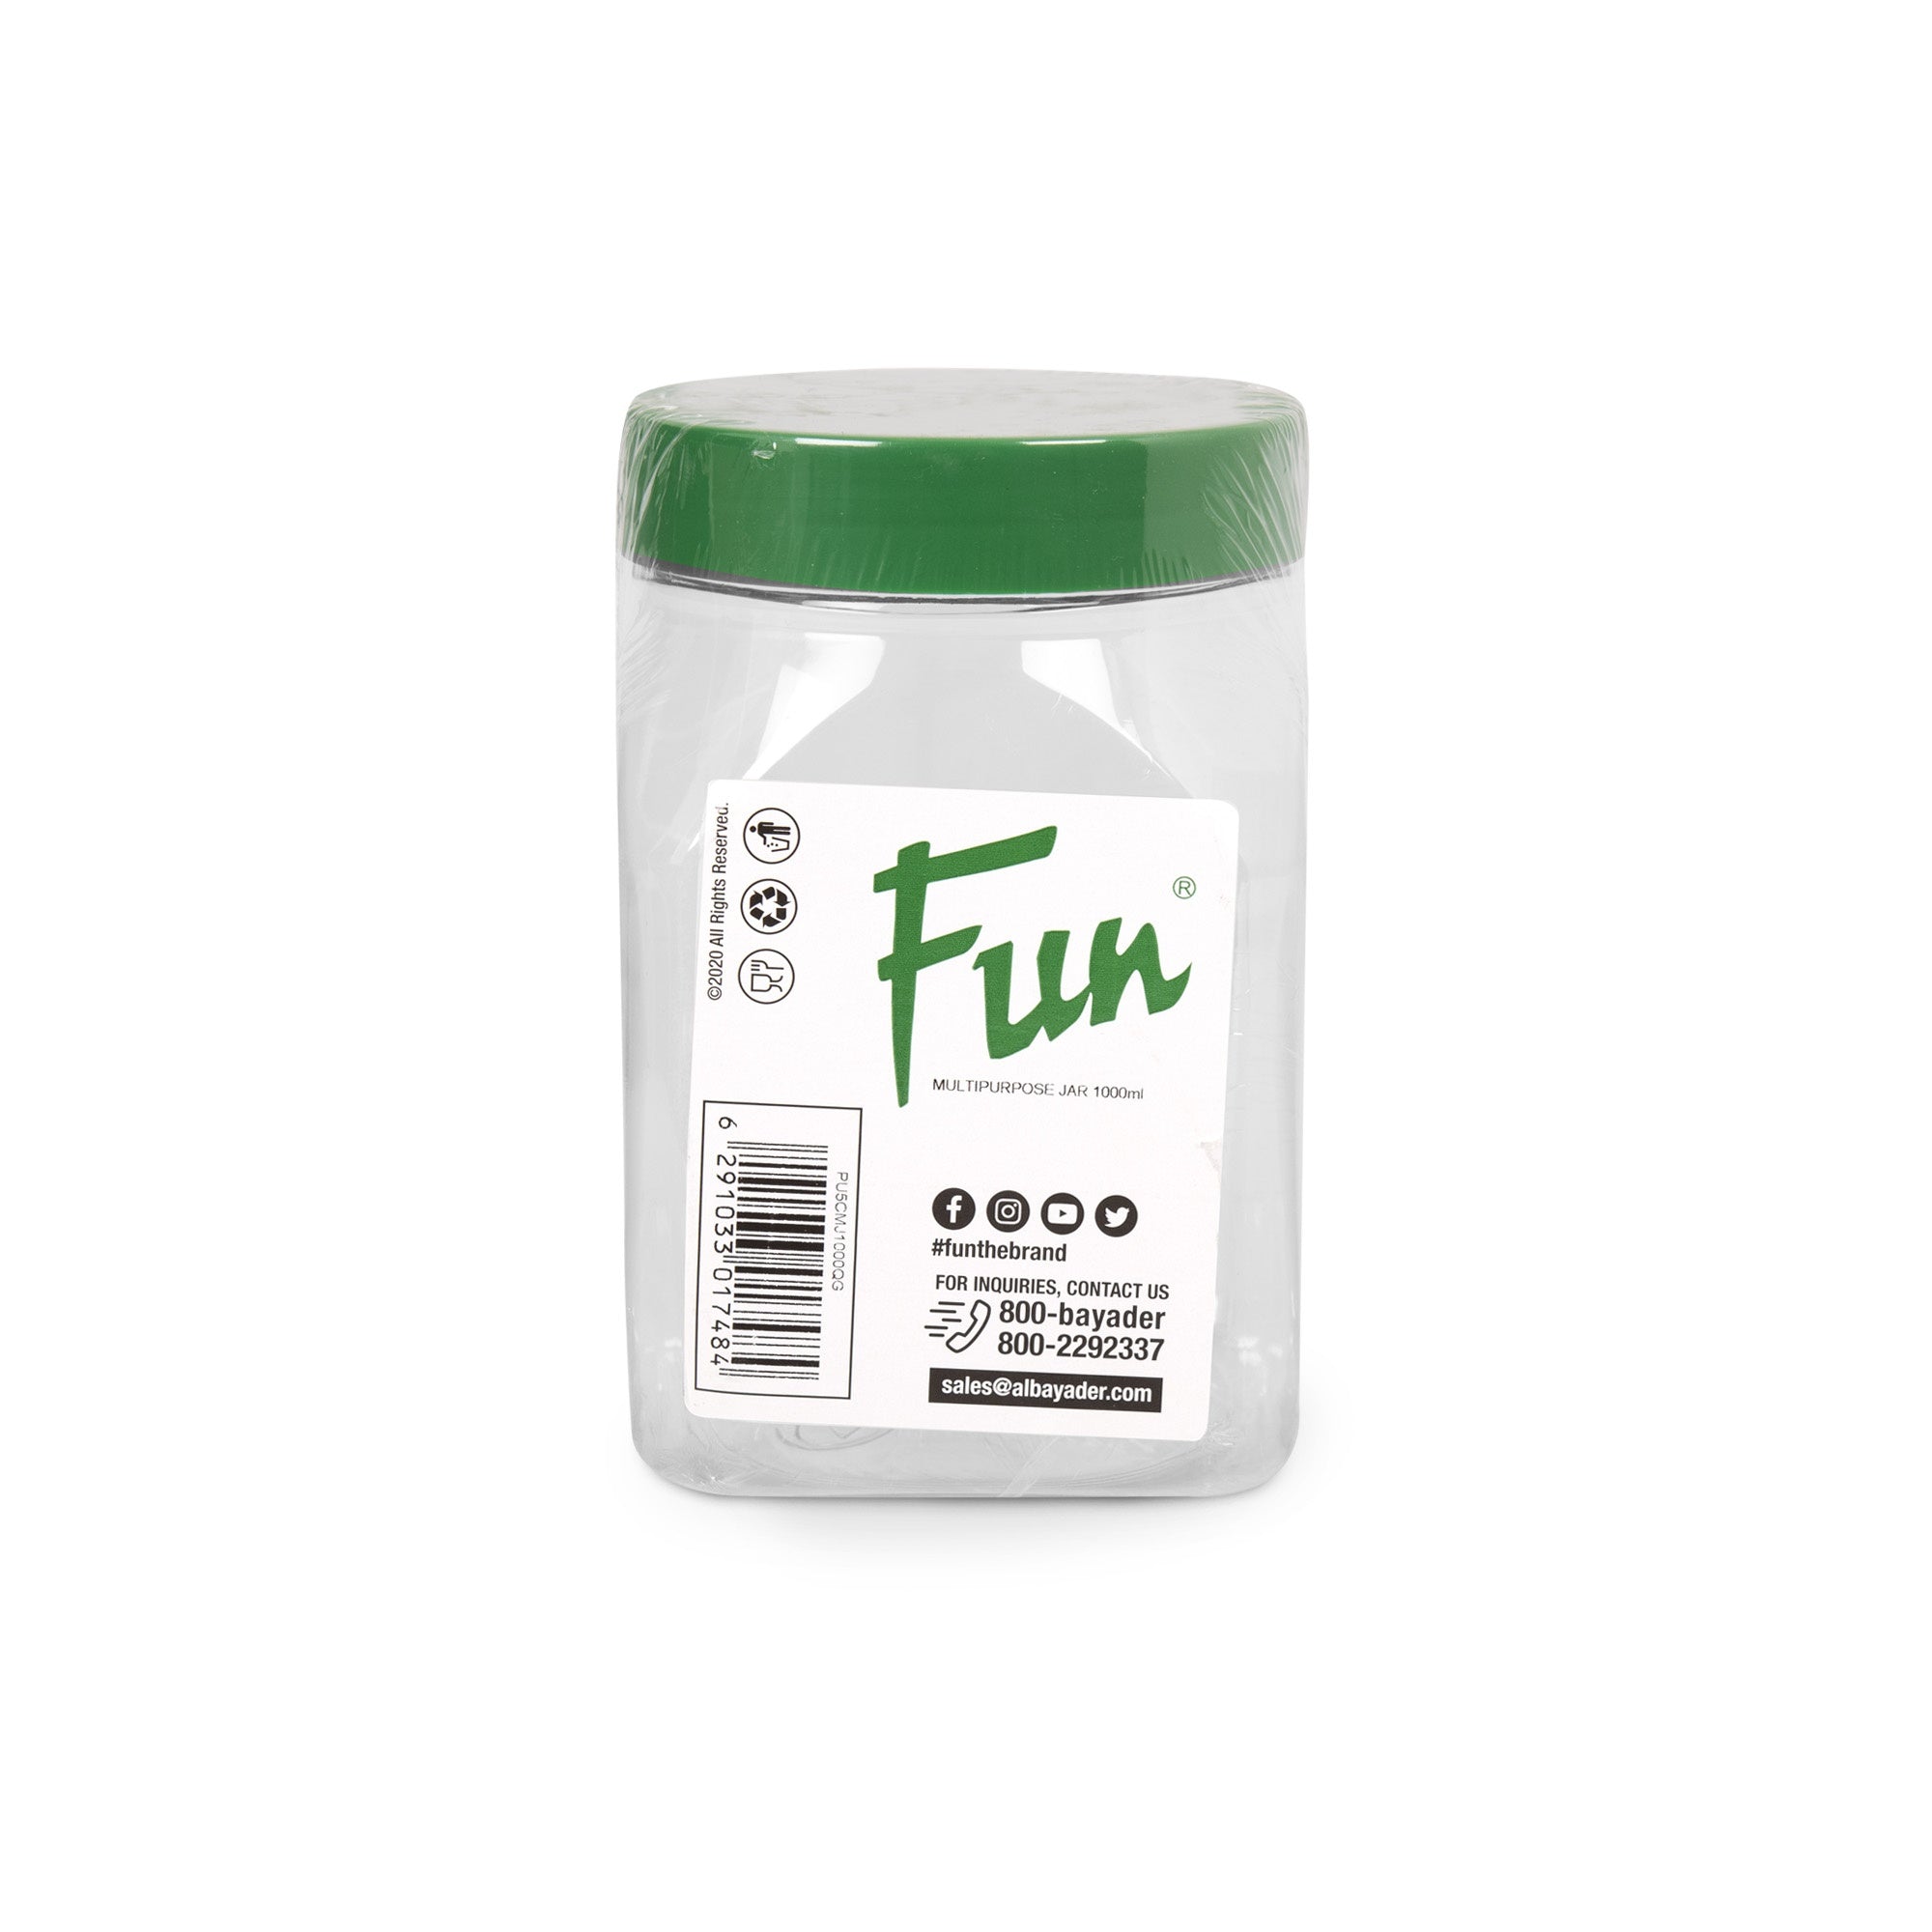 Fun® Multipurpose Jar 1000ml with Lid -Square